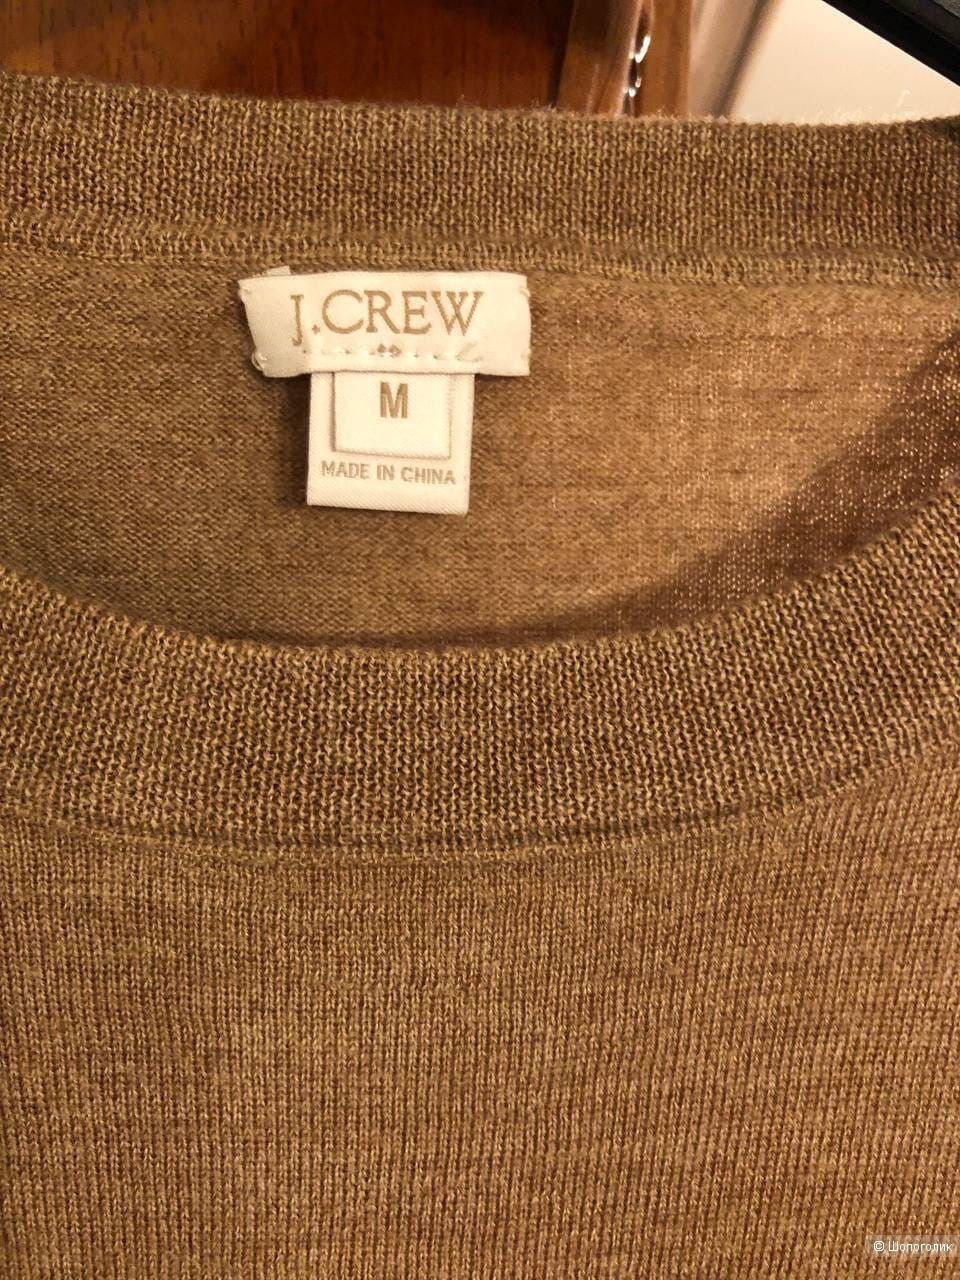 Женский свитер новый джемпер кофта s-m J Crew (JCrew)